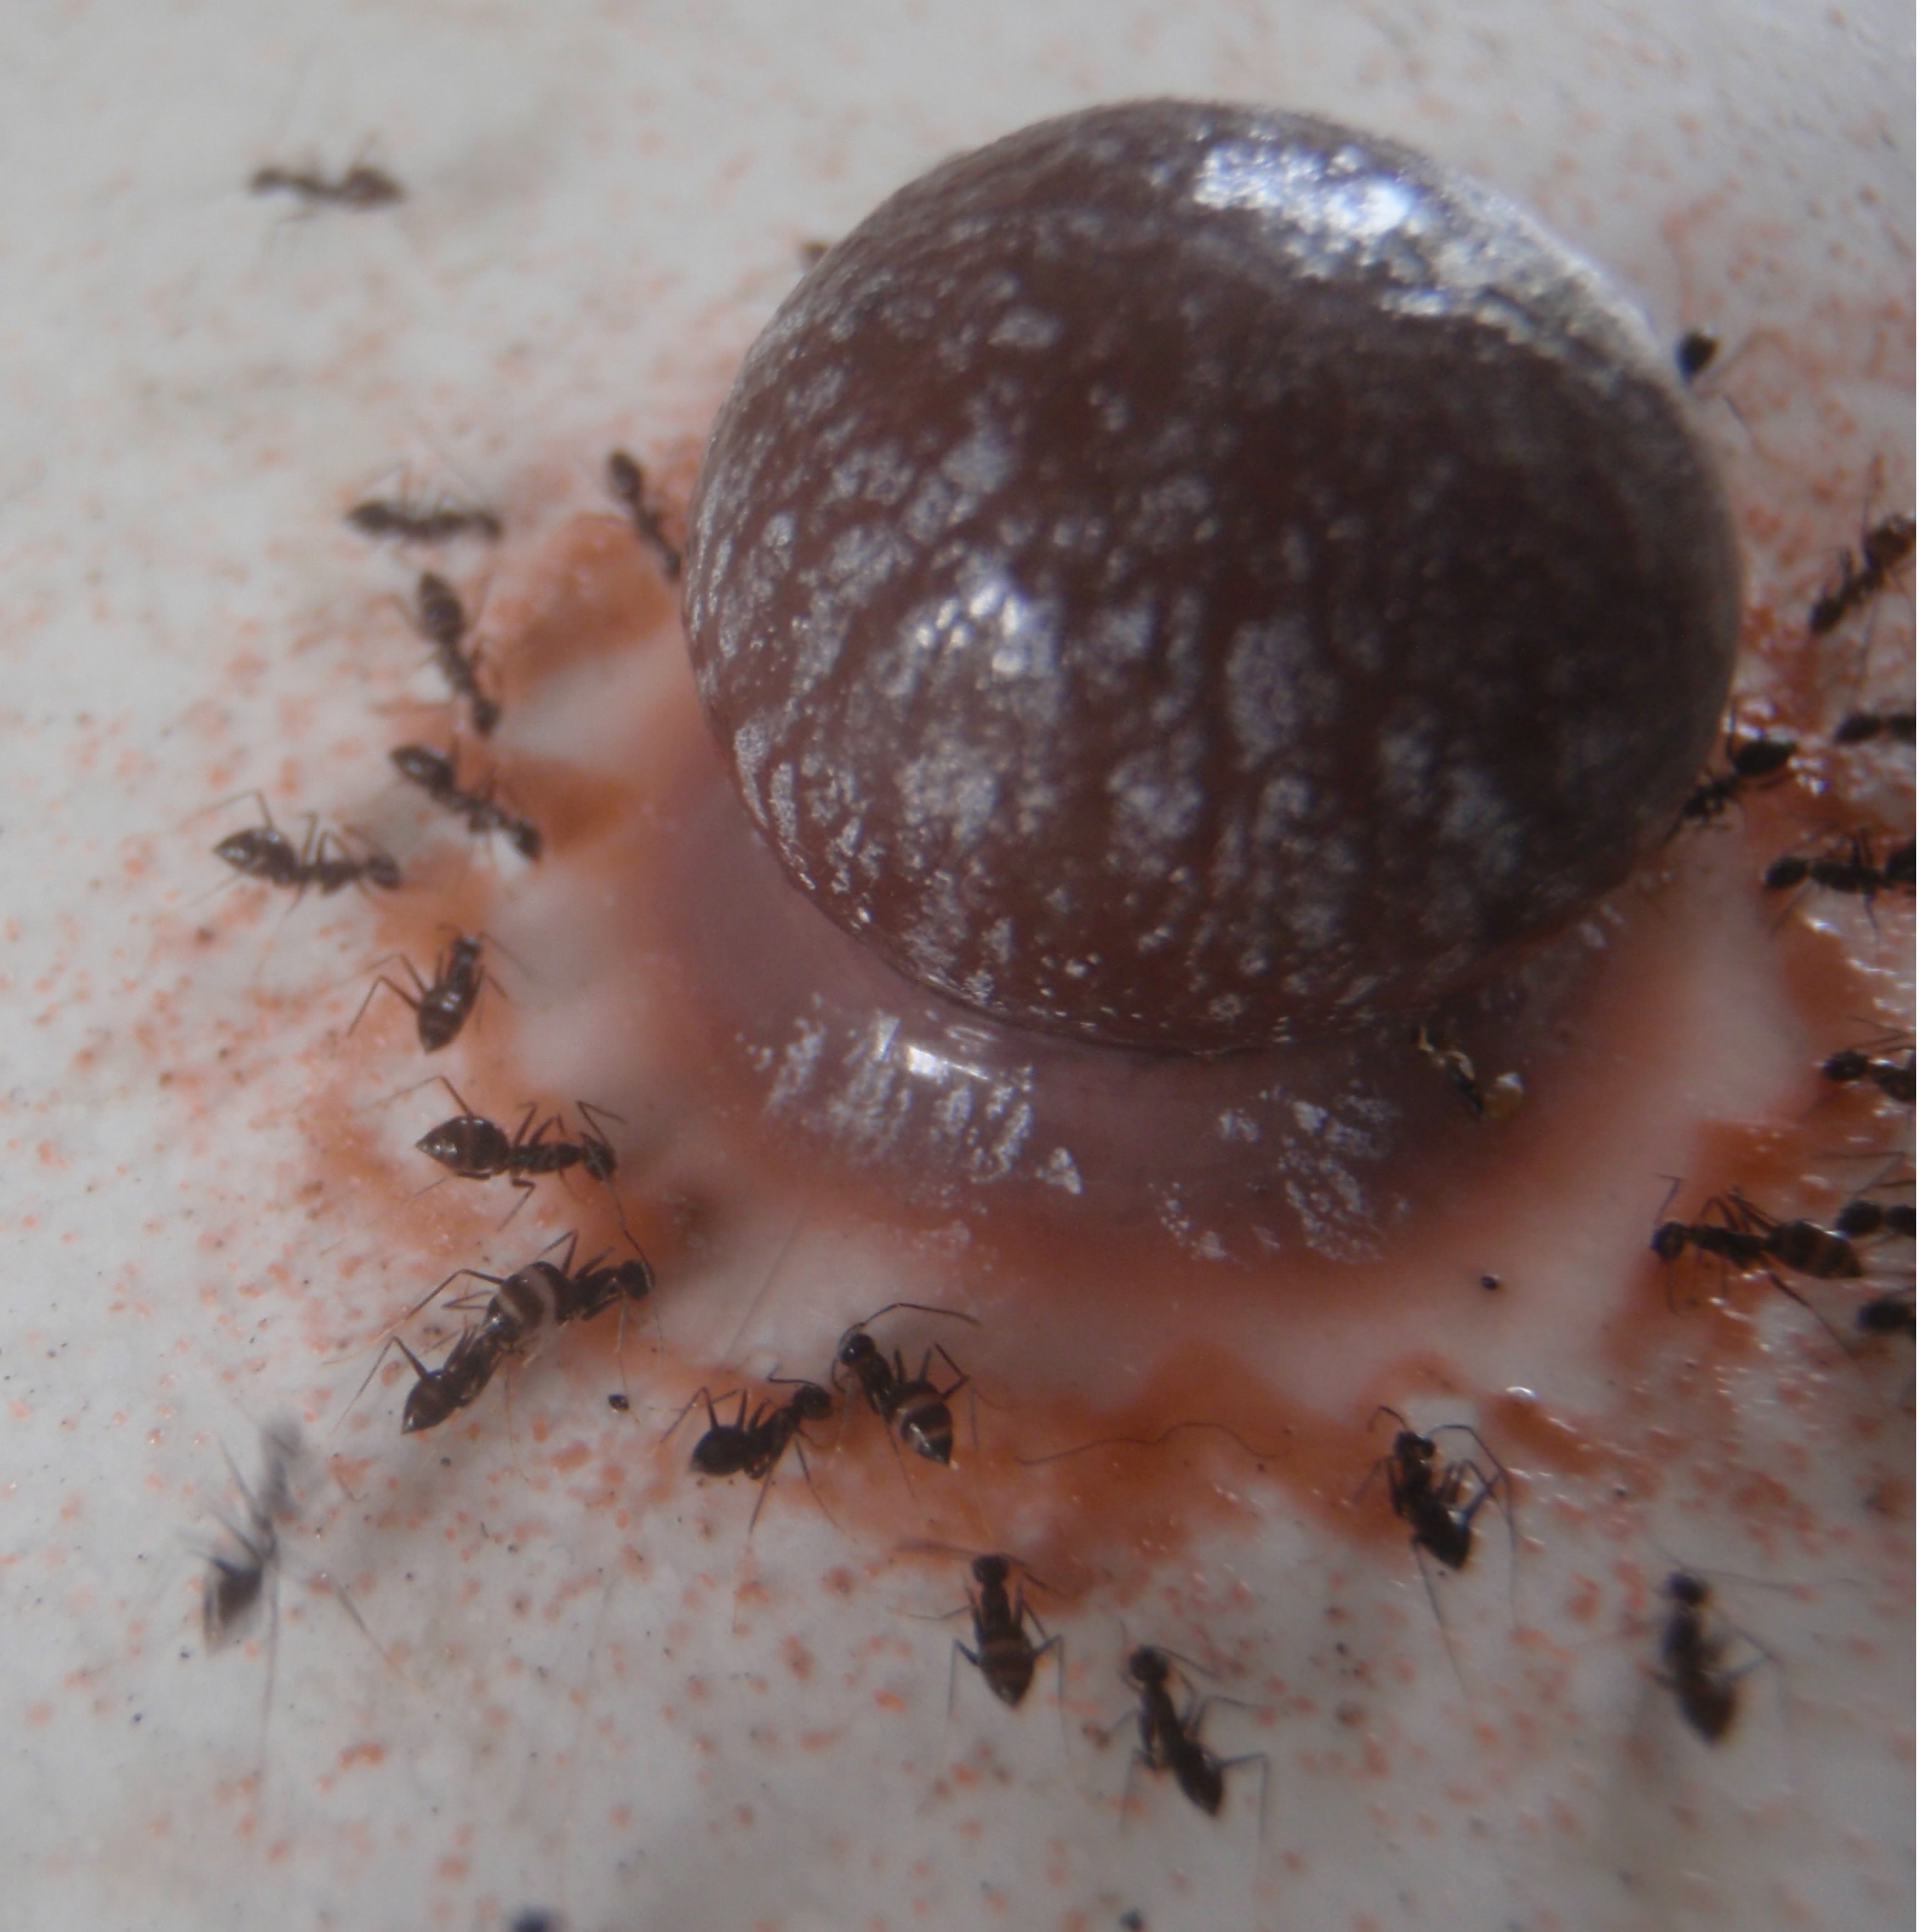 Ants feasting on melting M&Ms - Imgur